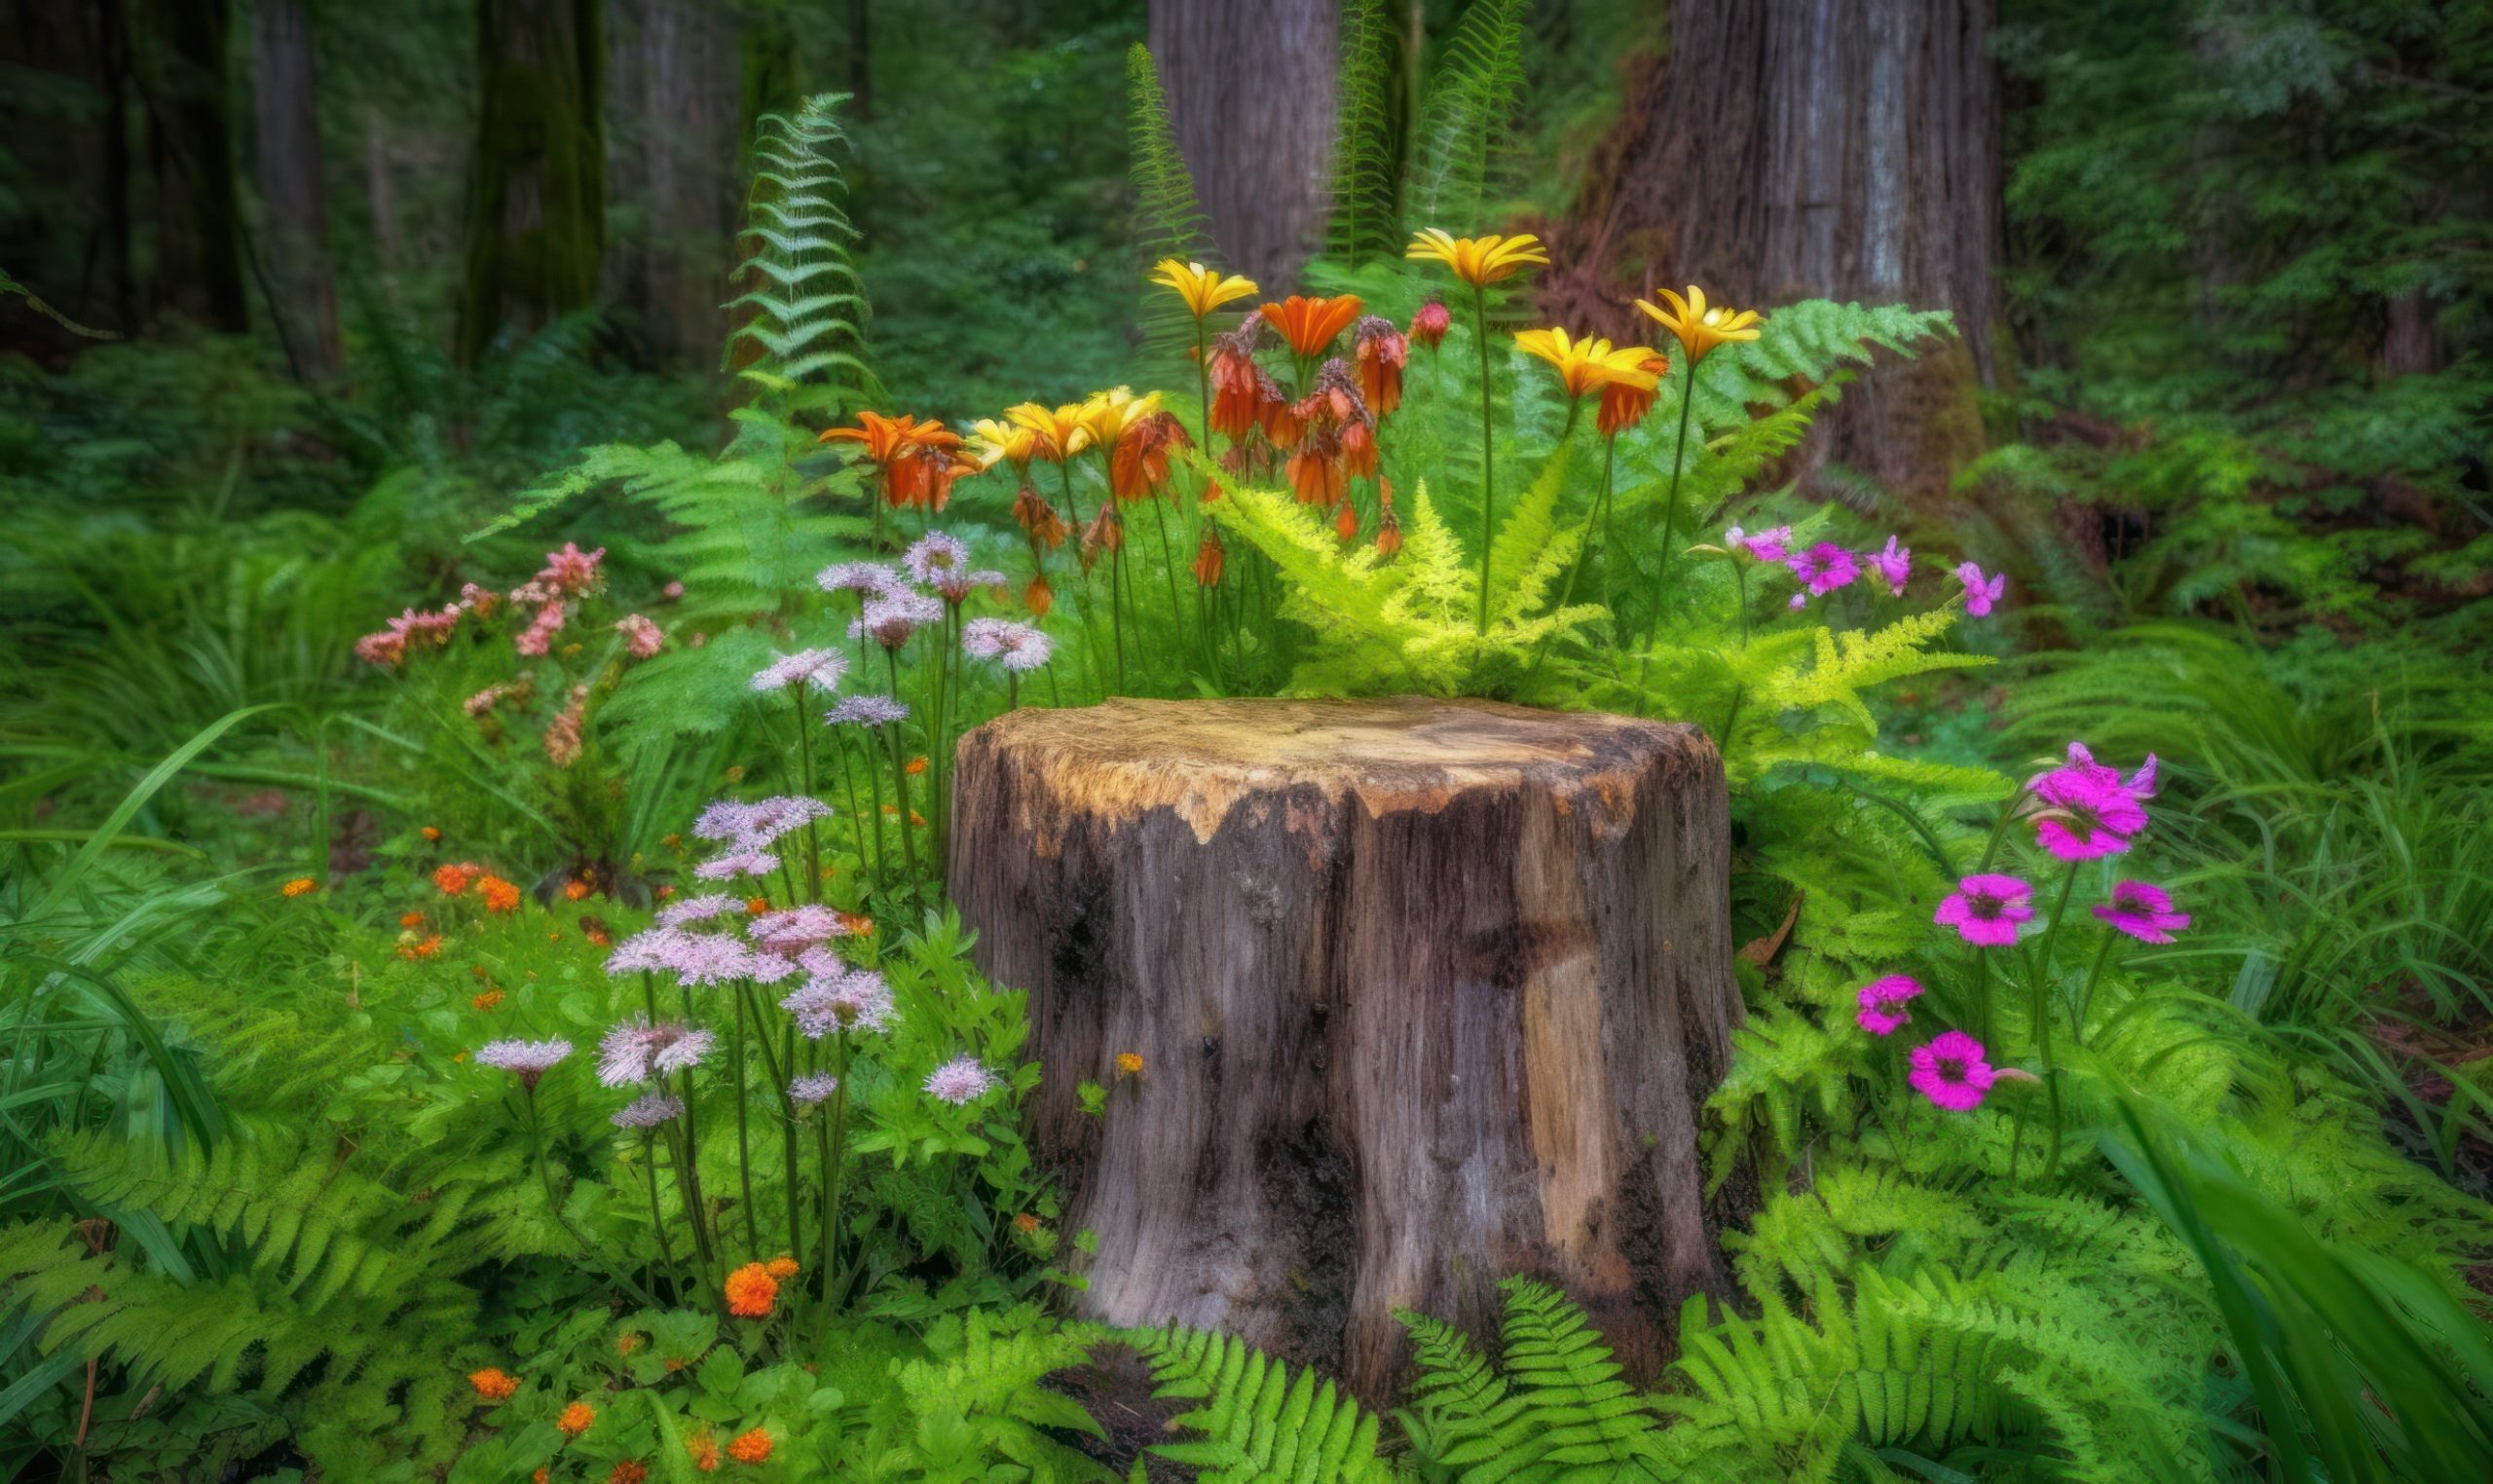 flowers and ferns around tree stump